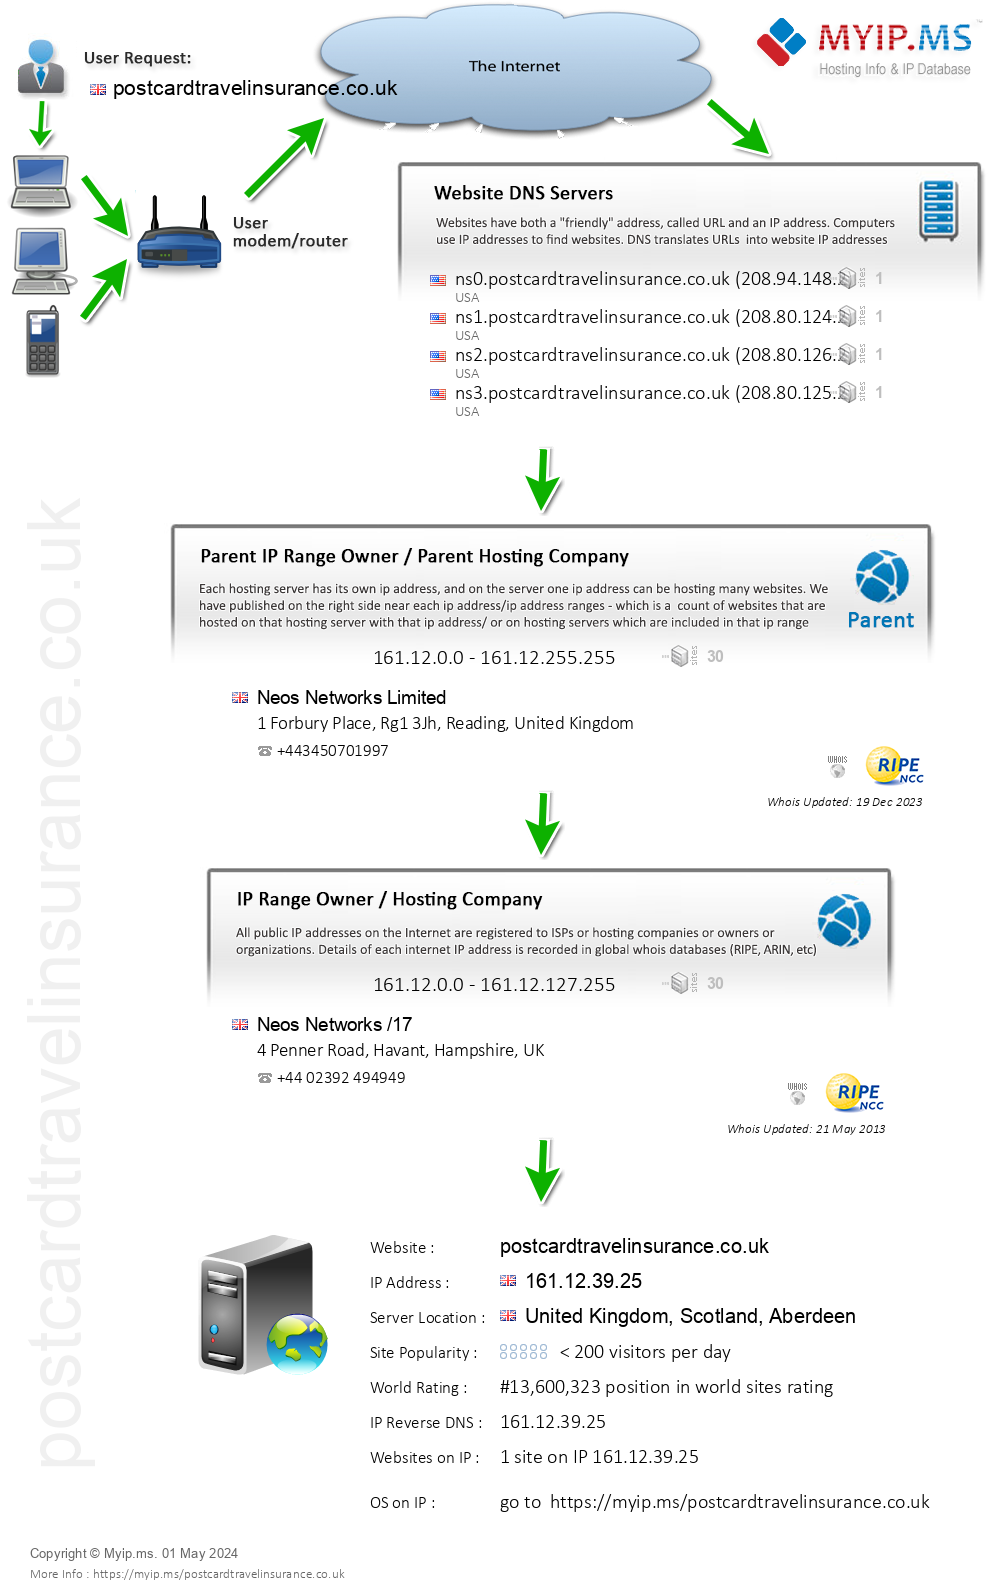 Postcardtravelinsurance.co.uk - Website Hosting Visual IP Diagram